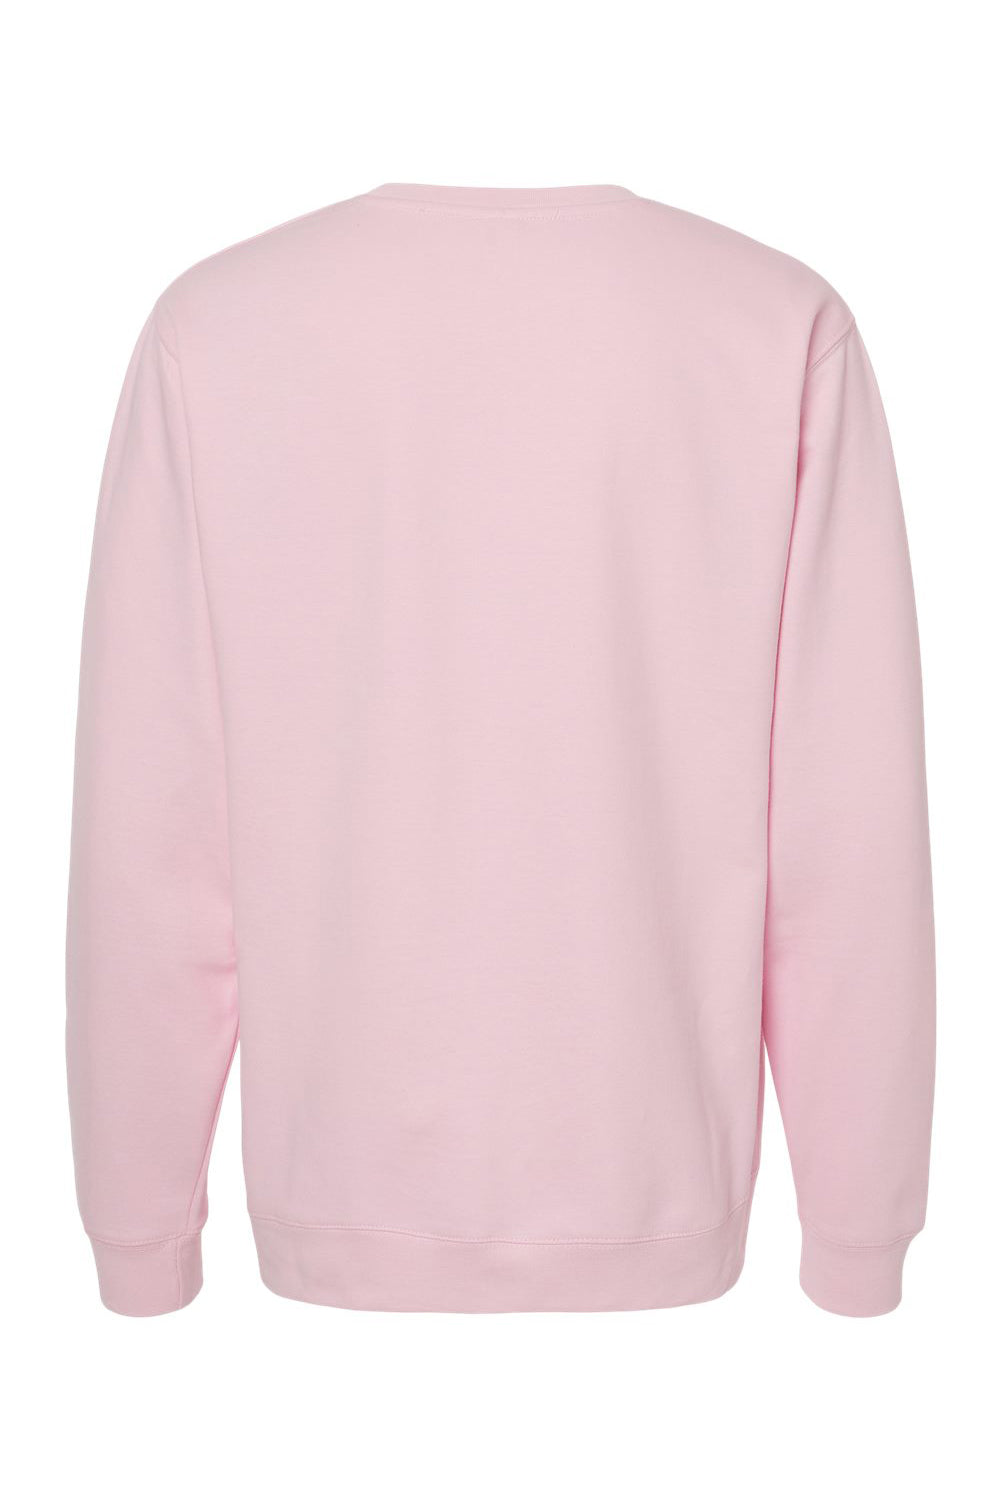 Independent Trading Co. SS3000 Mens Crewneck Sweatshirt Light Pink Flat Back